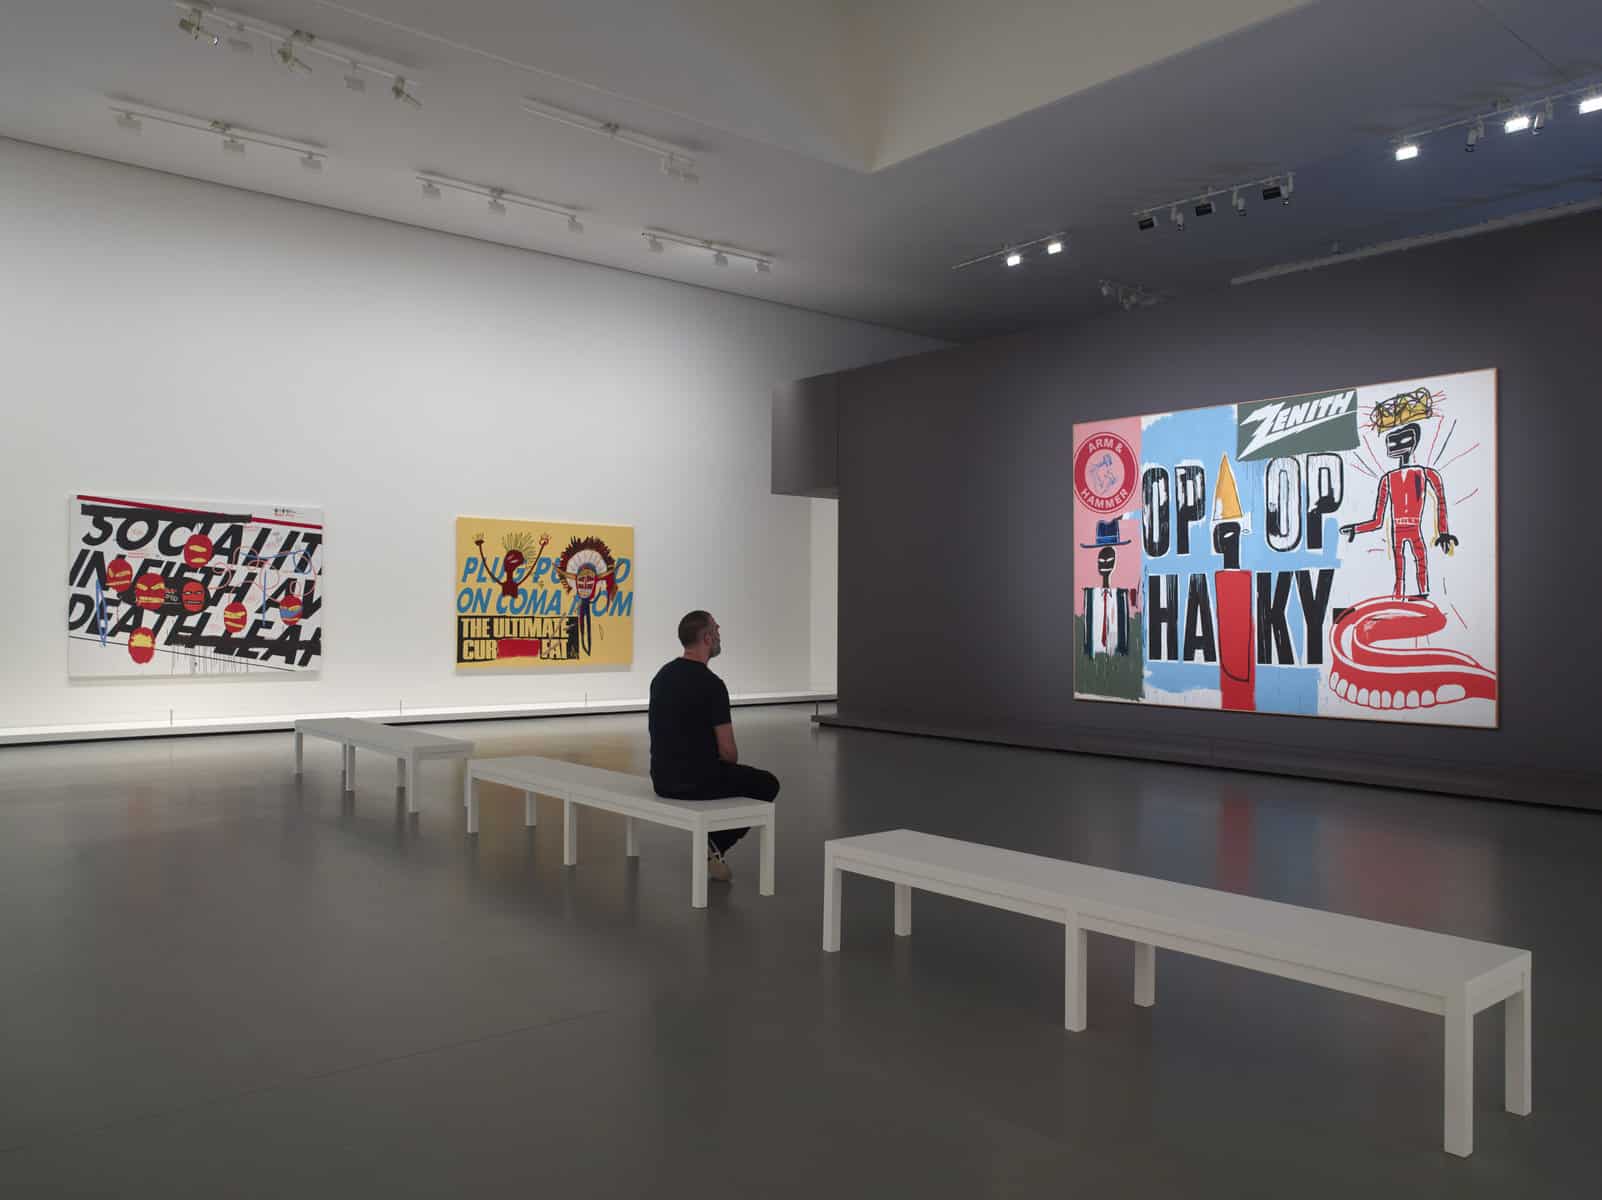 I Prefer Paris: Basquiat X Warhol at Fondation Louis Vuitton